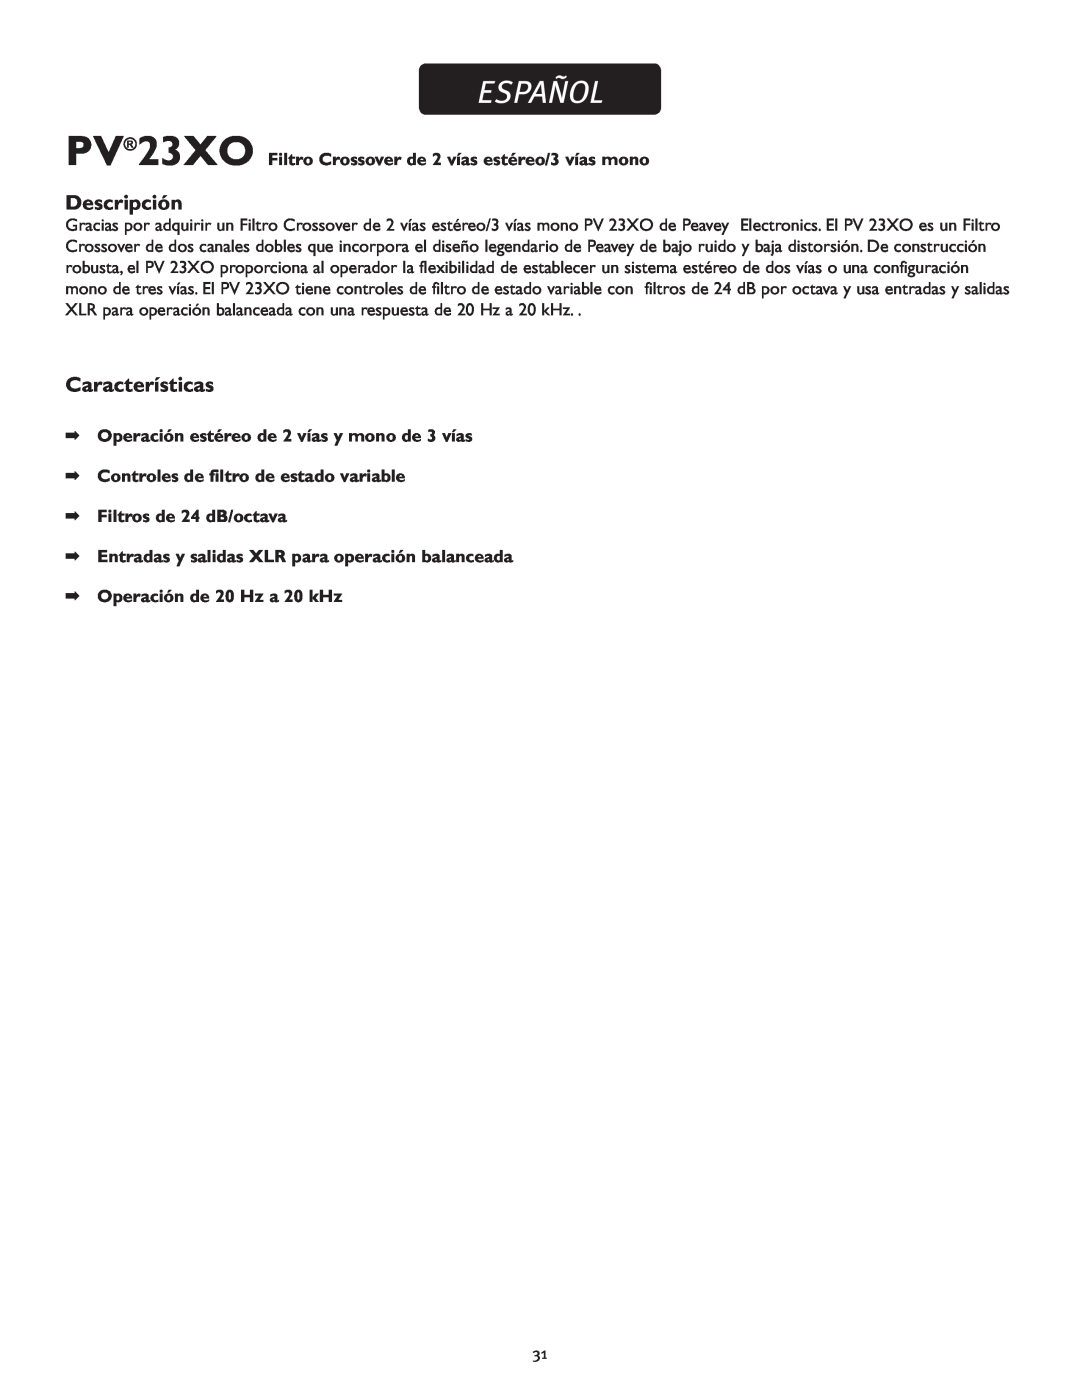 Peavey 23XO Español, Descripción, Características, Operación estéreo de 2 vías y mono de 3 vías, Filtros de 24 dB/octava 